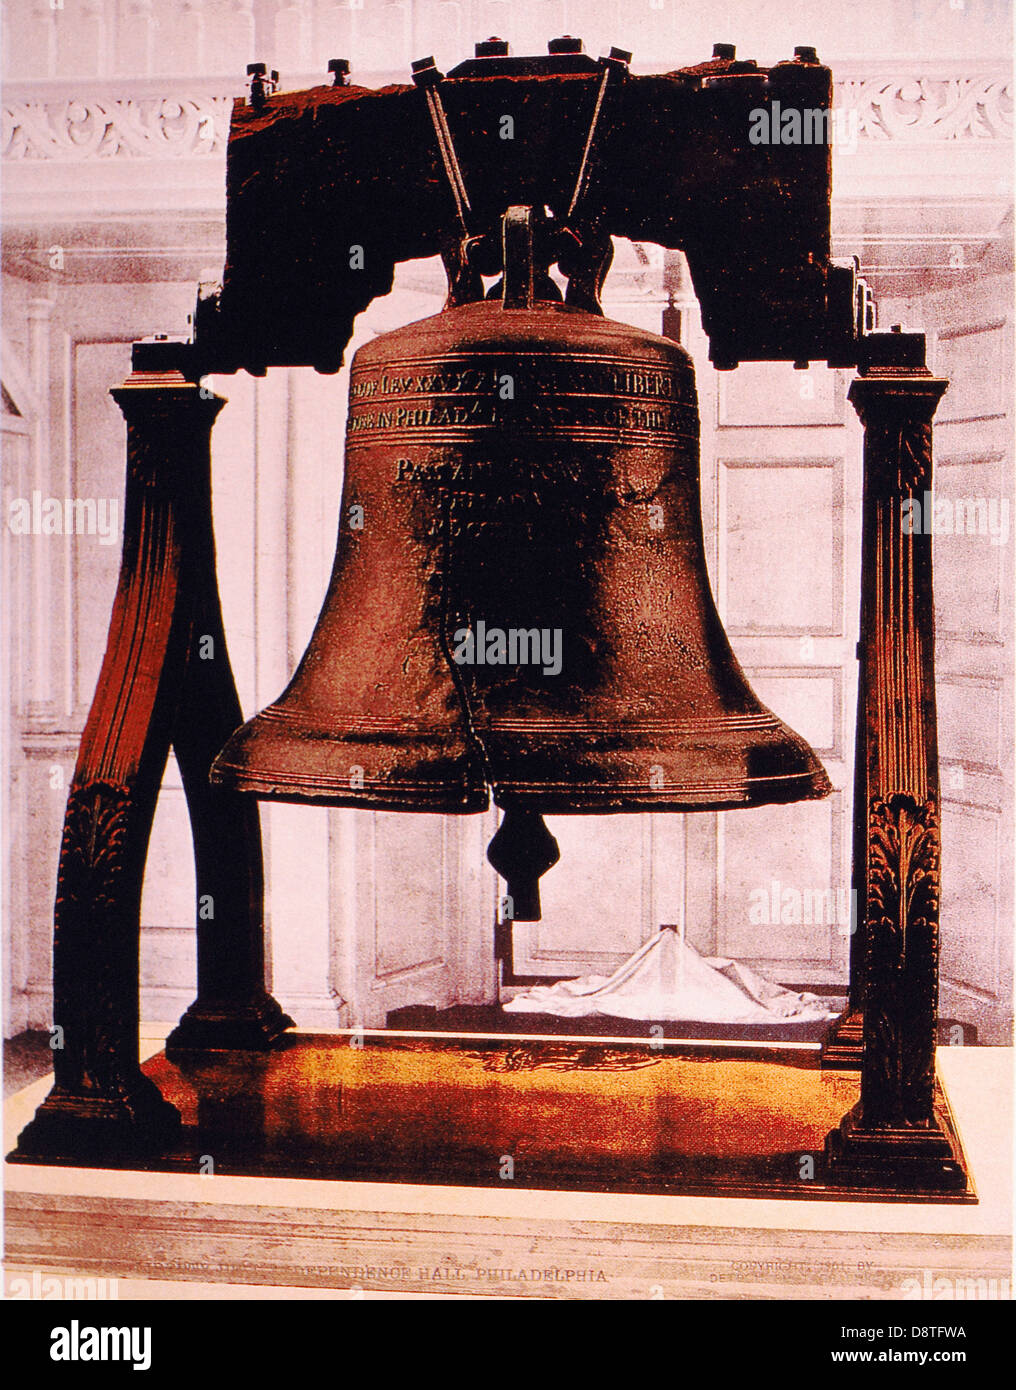 Liberty Bell, Independence Hall, Philadelphie, Pennsylvanie, USA, par William Henry Jackson, vers 1900 Banque D'Images